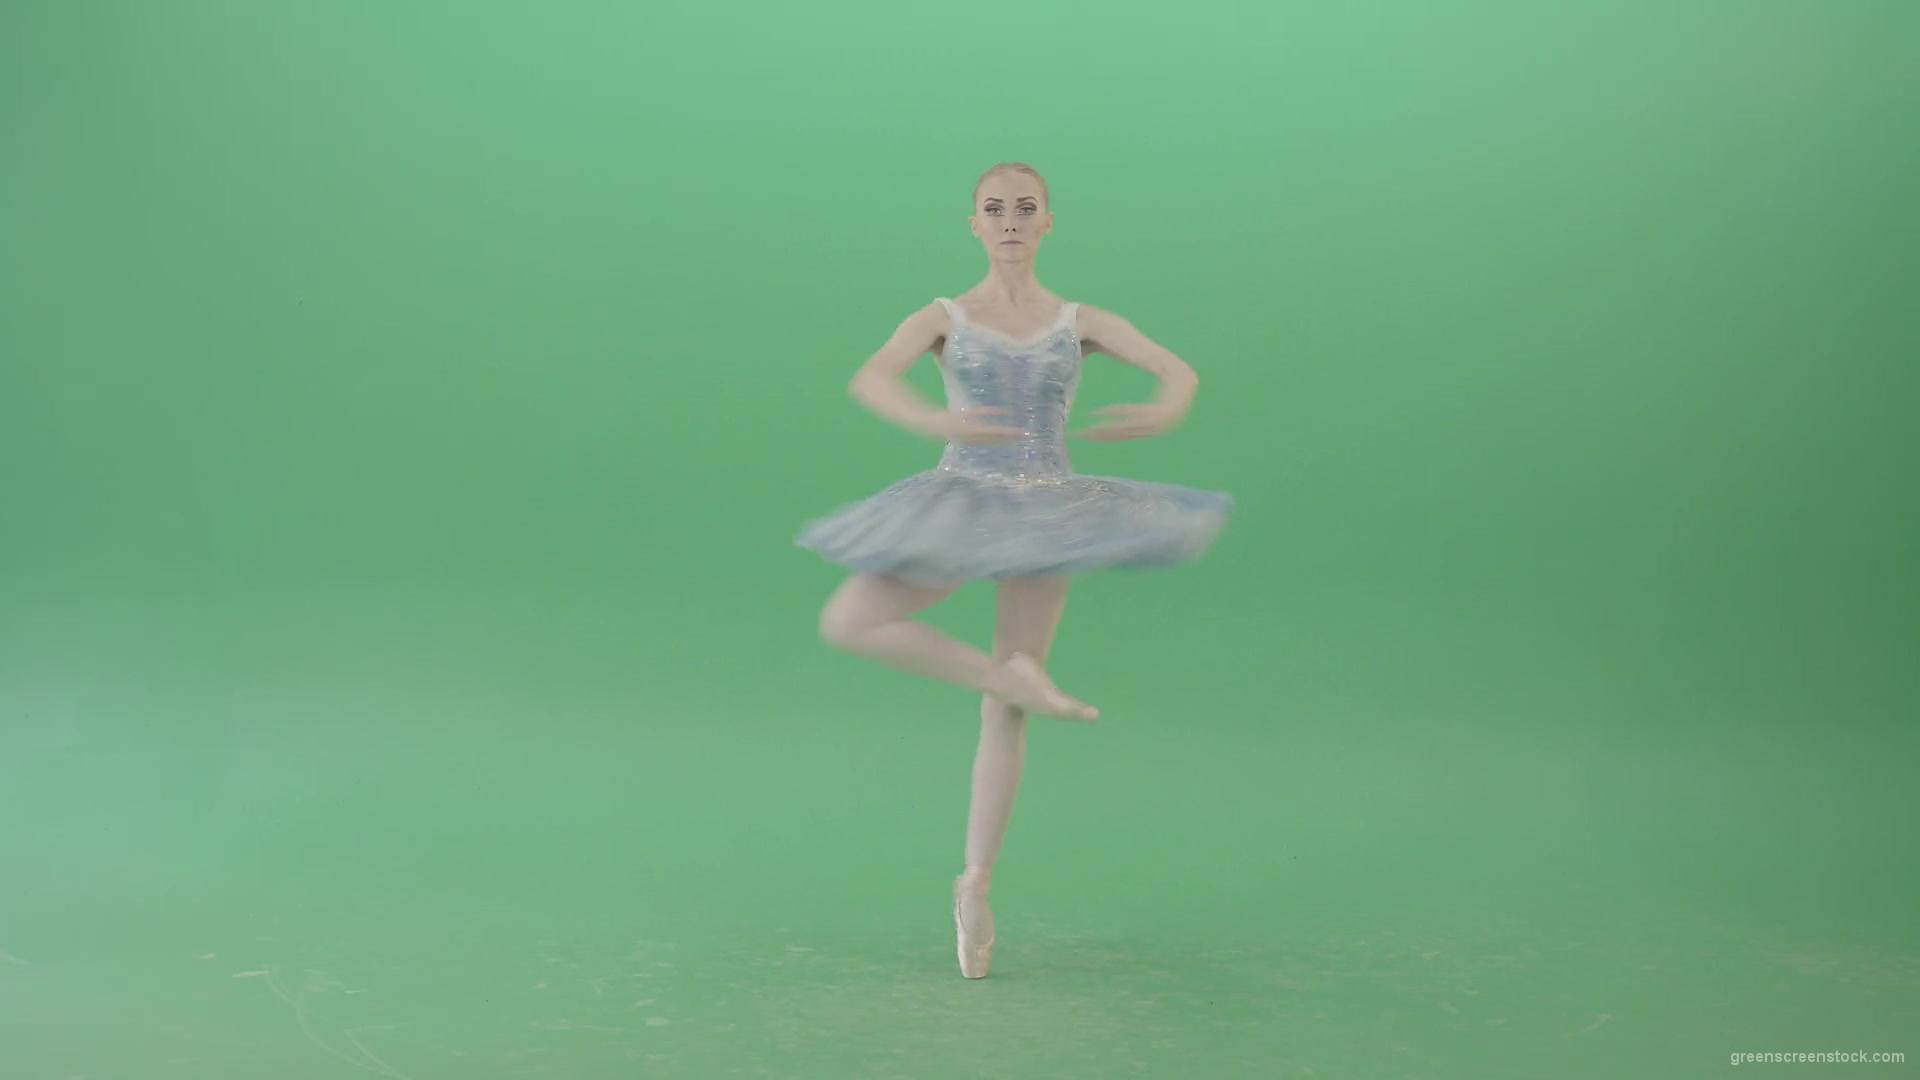 Beauty-blonde-ballerin-ballet-dancing-girl-in-blue-dress-spinning-over-green-screen-4K-Video-Footag-30fps-1920_006 Green Screen Stock